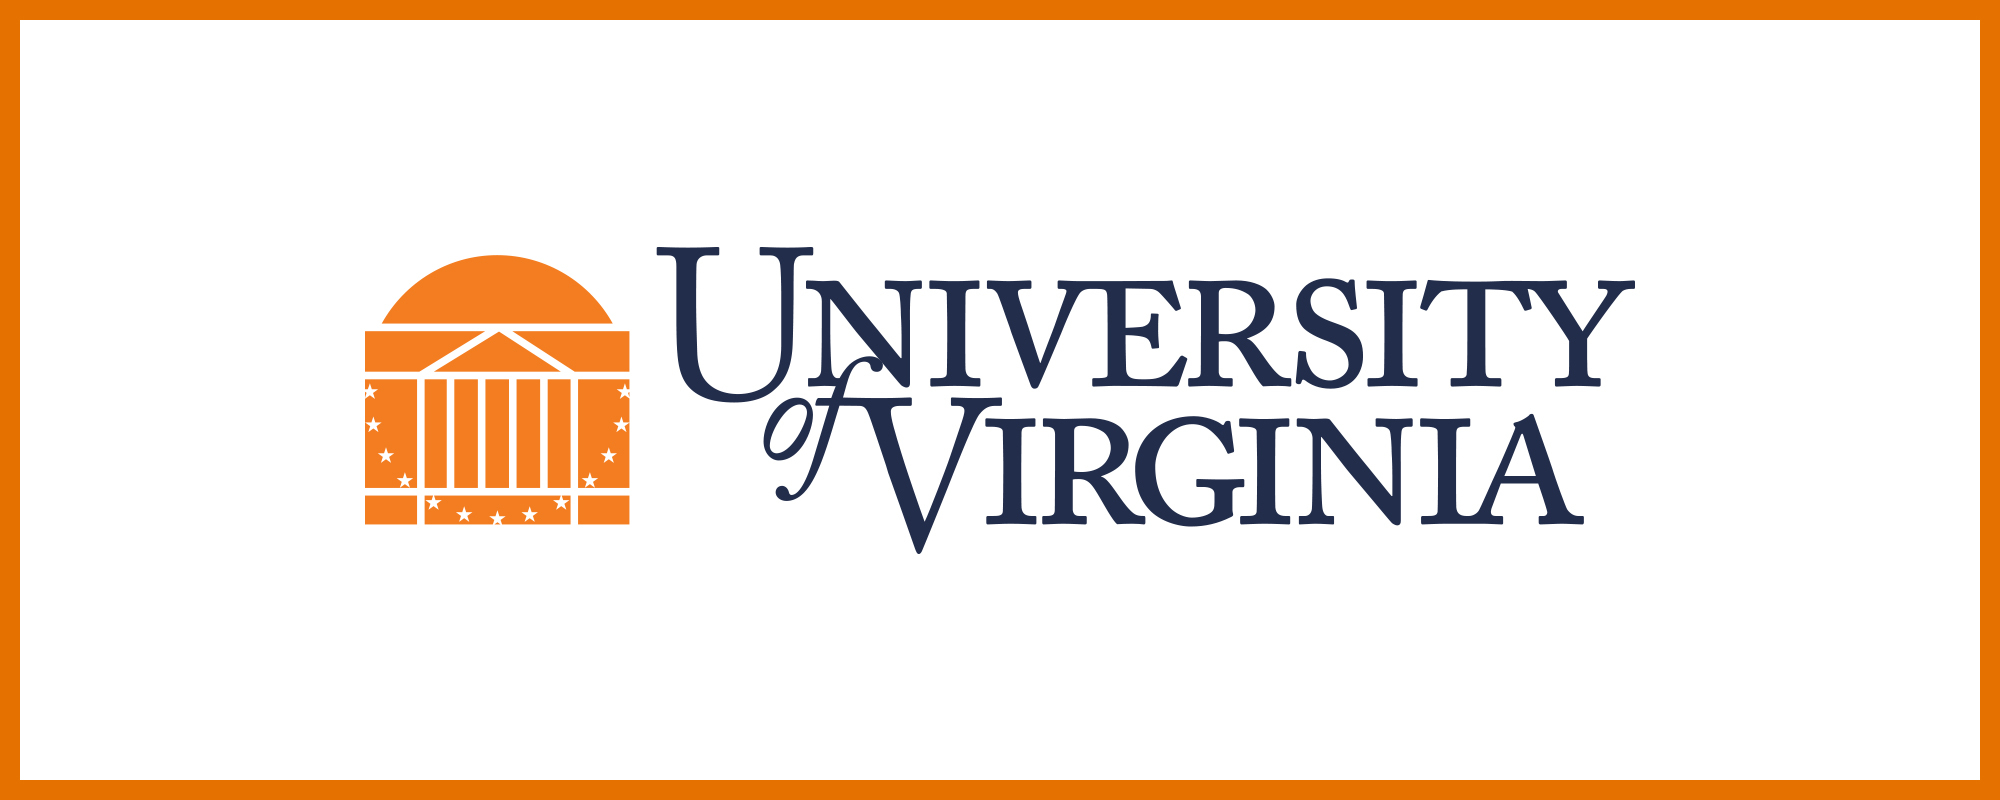 Formal Horizontal version of the University of Virginia logo